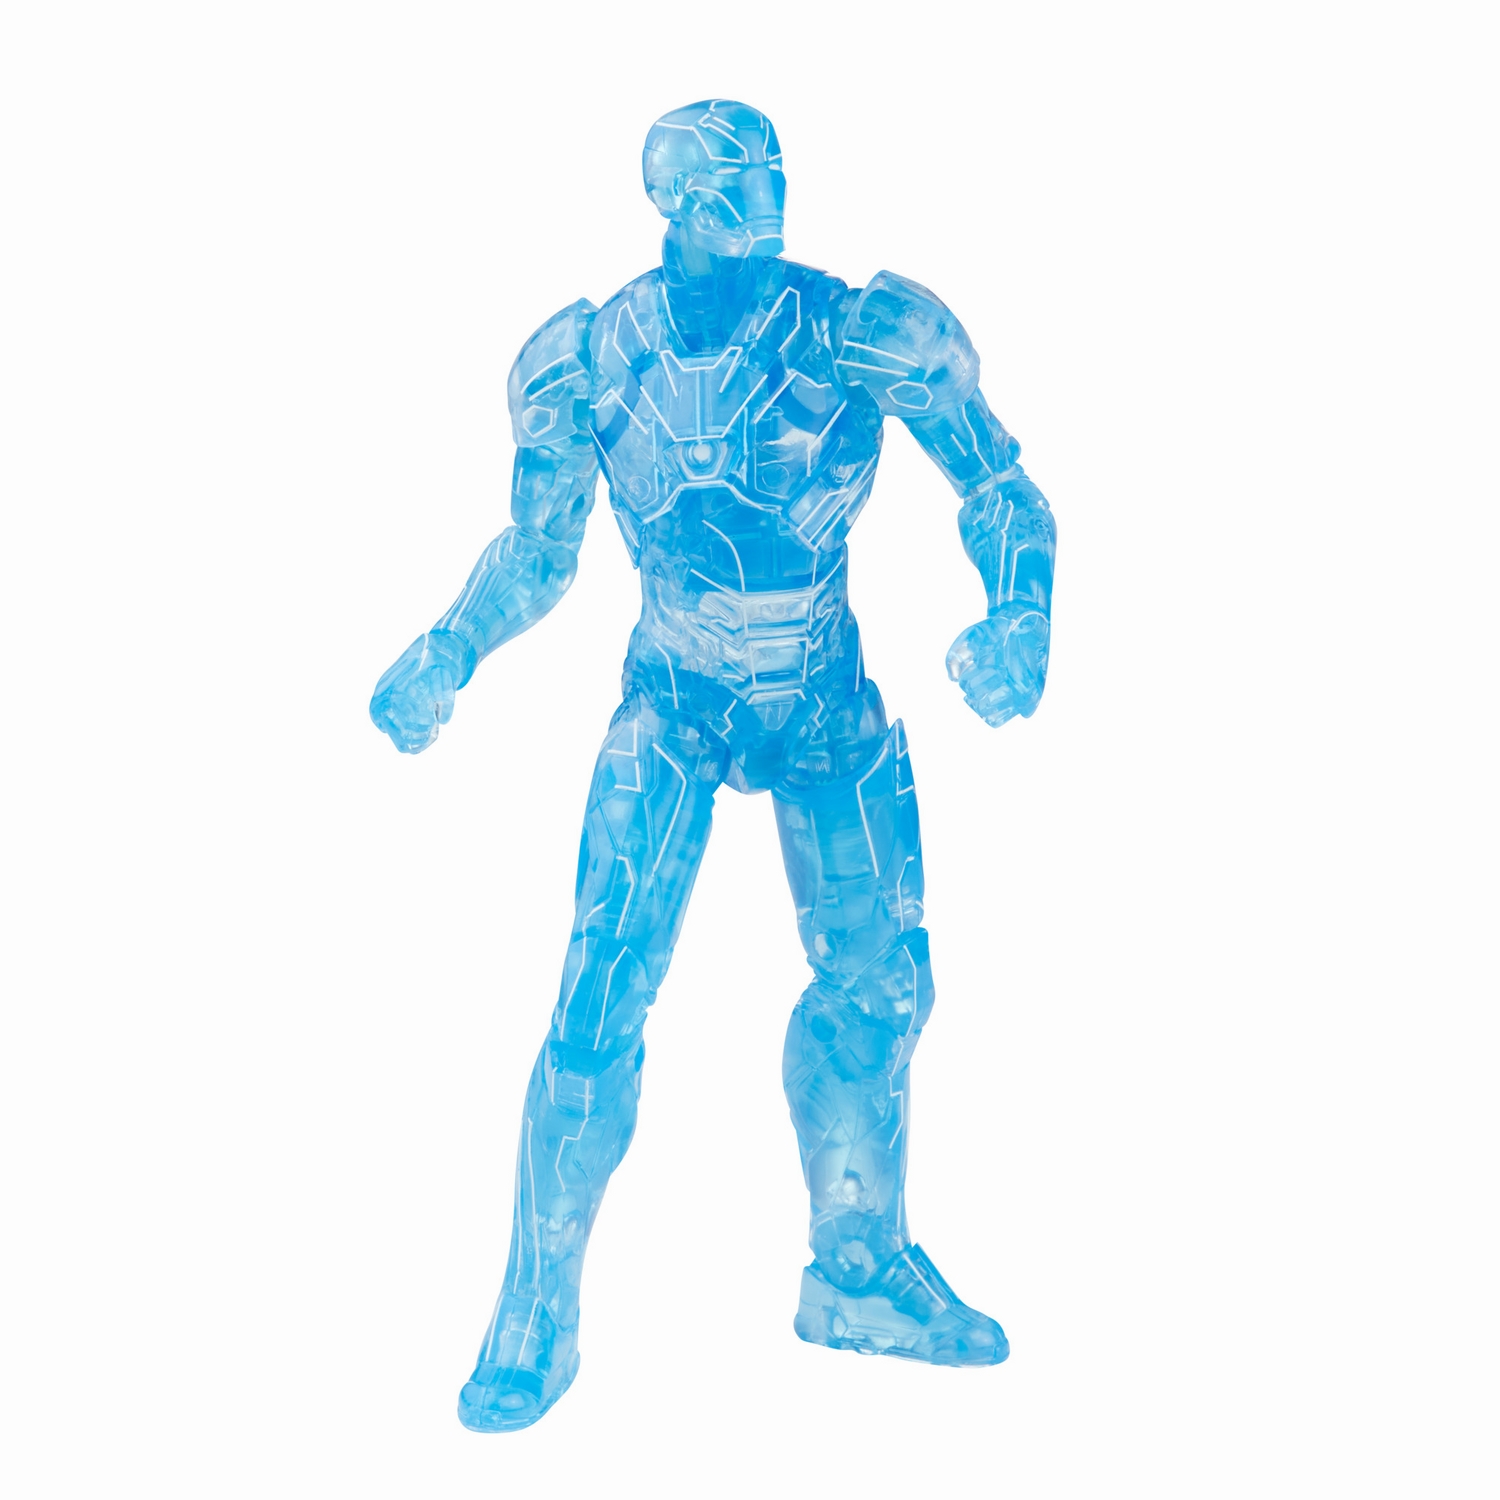 MARVEL LEGENDS SERIES 6-INCH IRON MAN Figure Assortment - Hologram Iron Man - oop (2).jpg